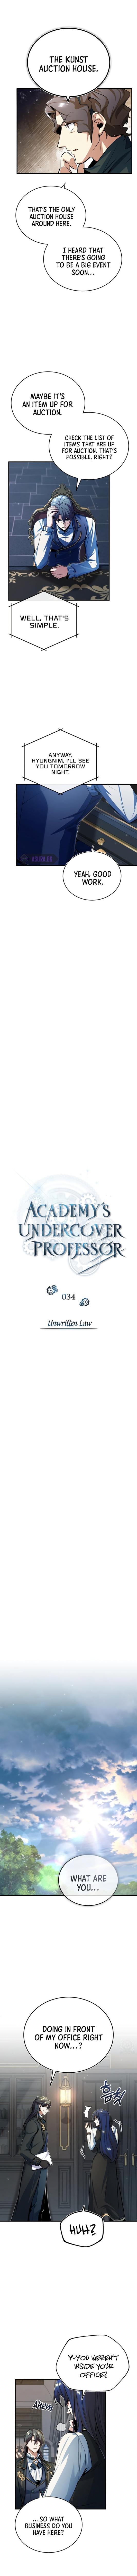 Academys Undercover Professor 34 2